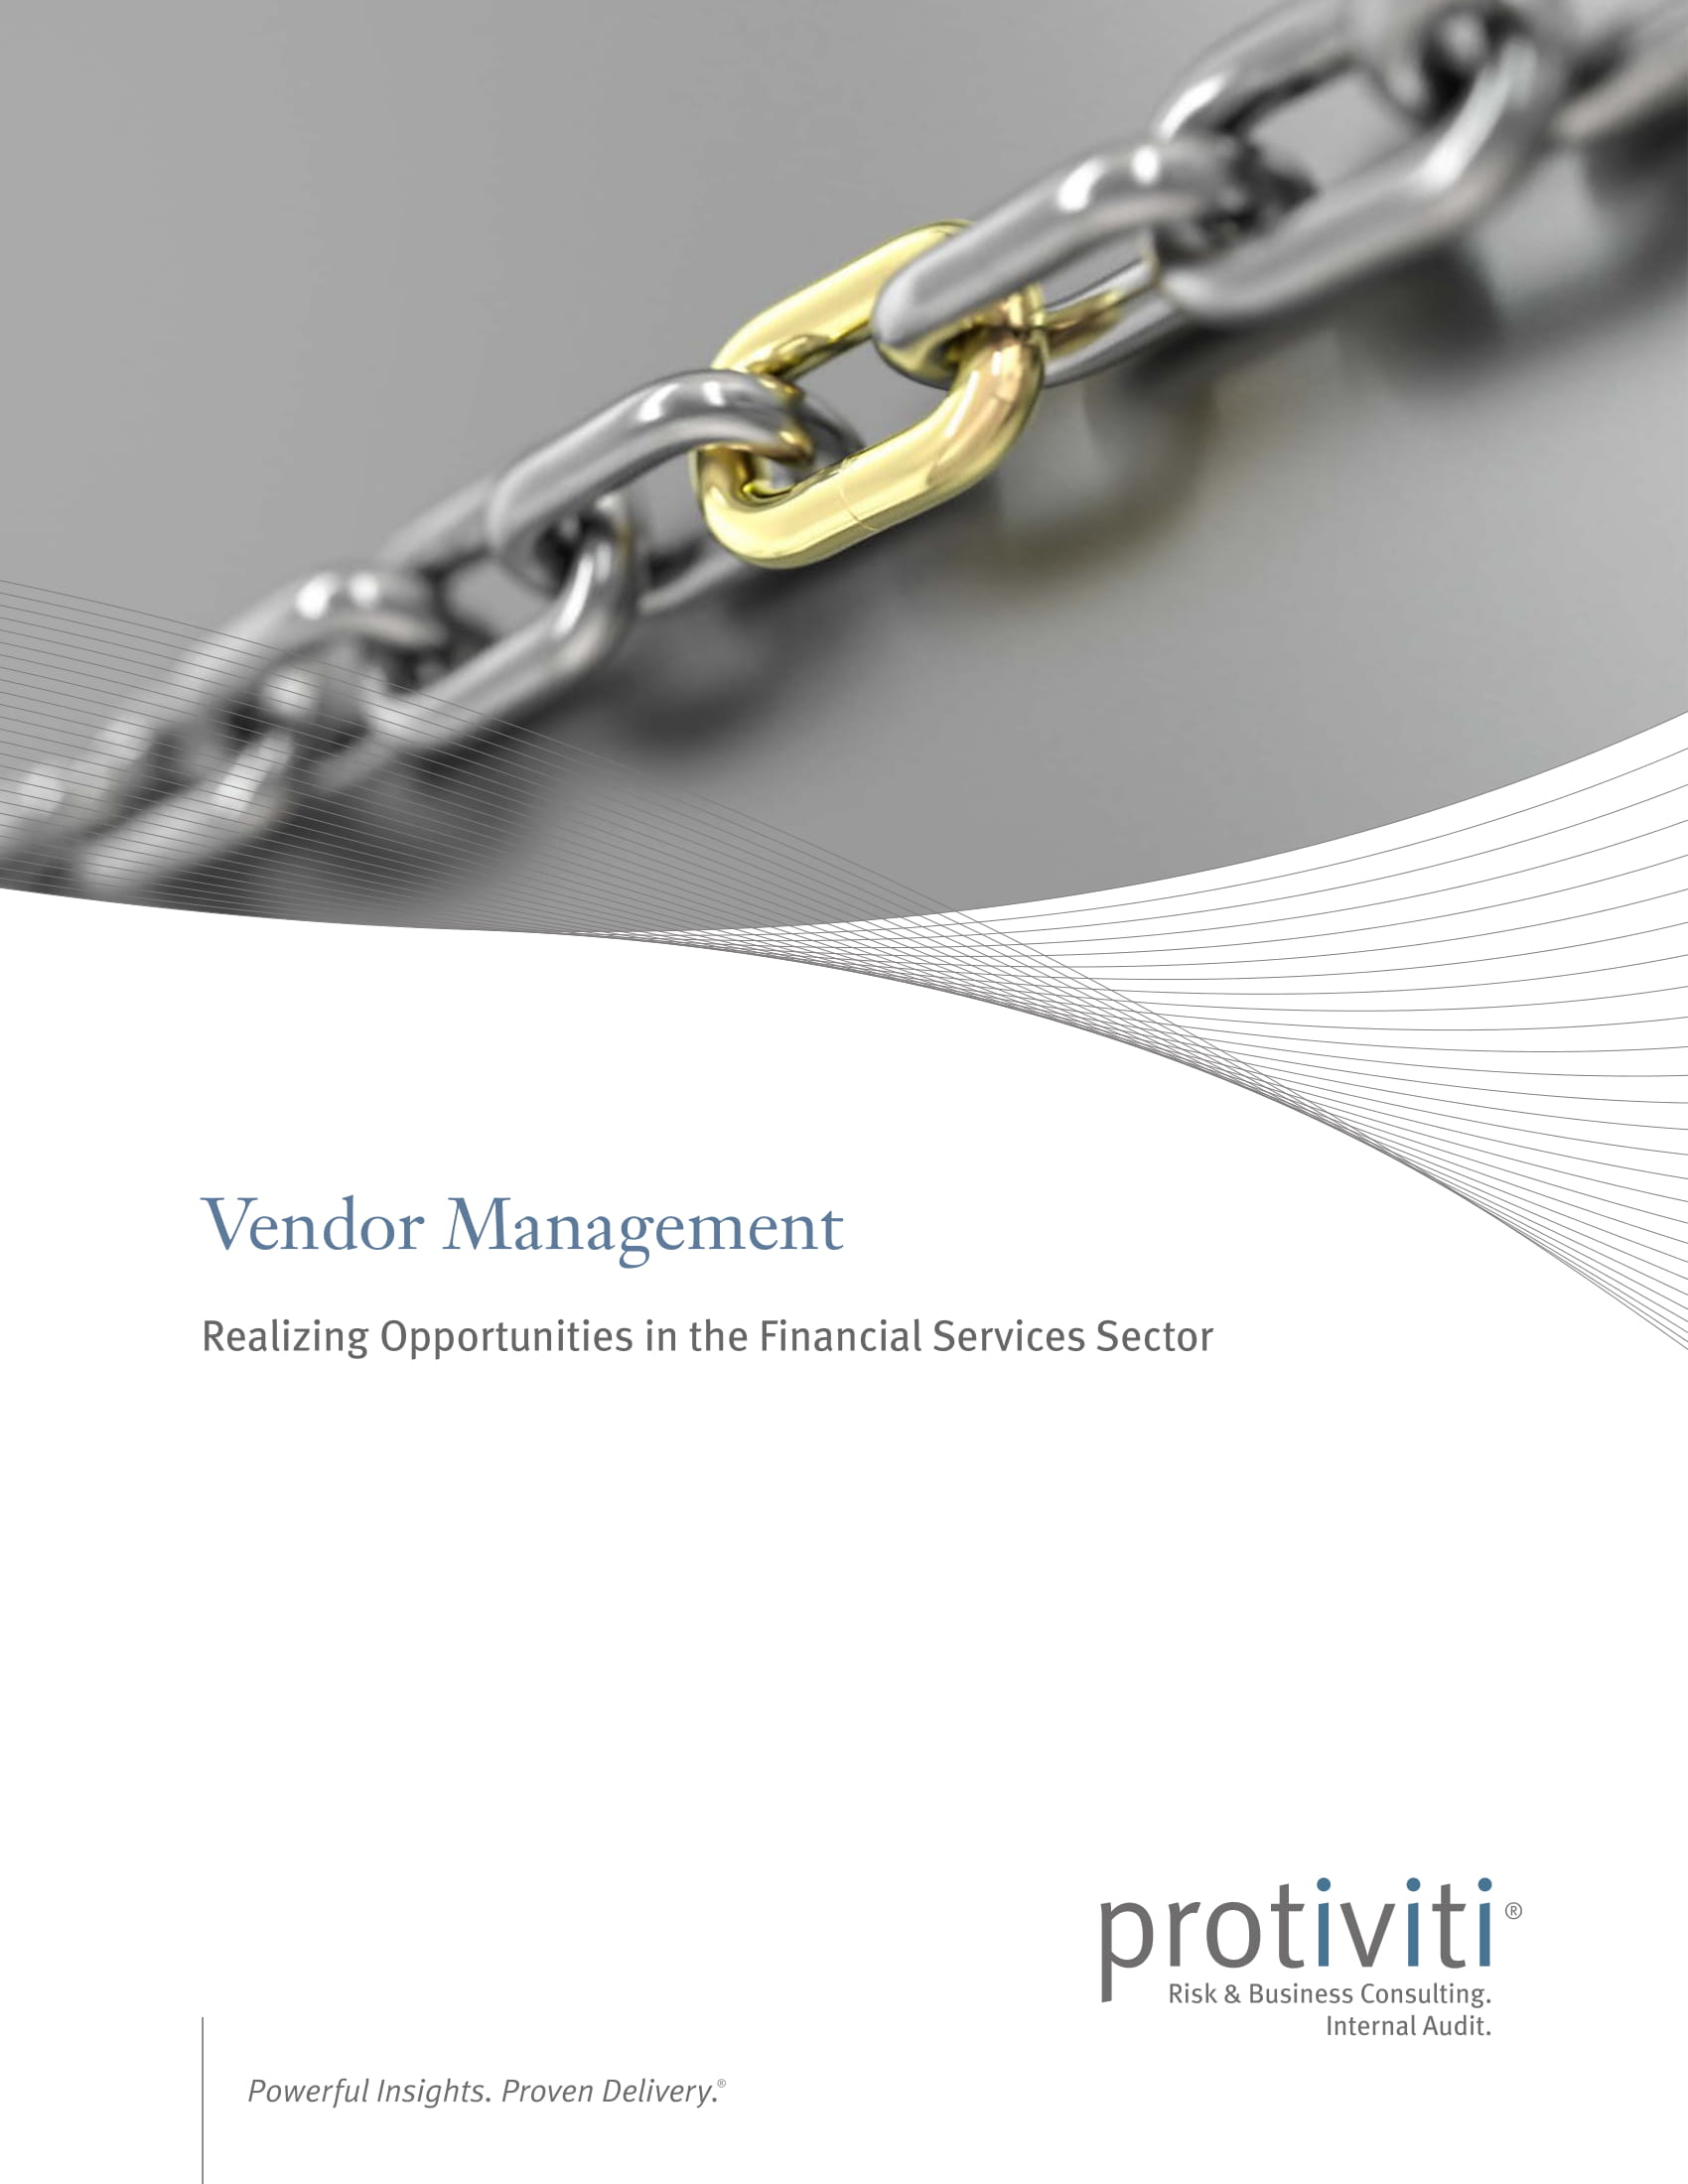 vendor management with vendor analysis guide example 01